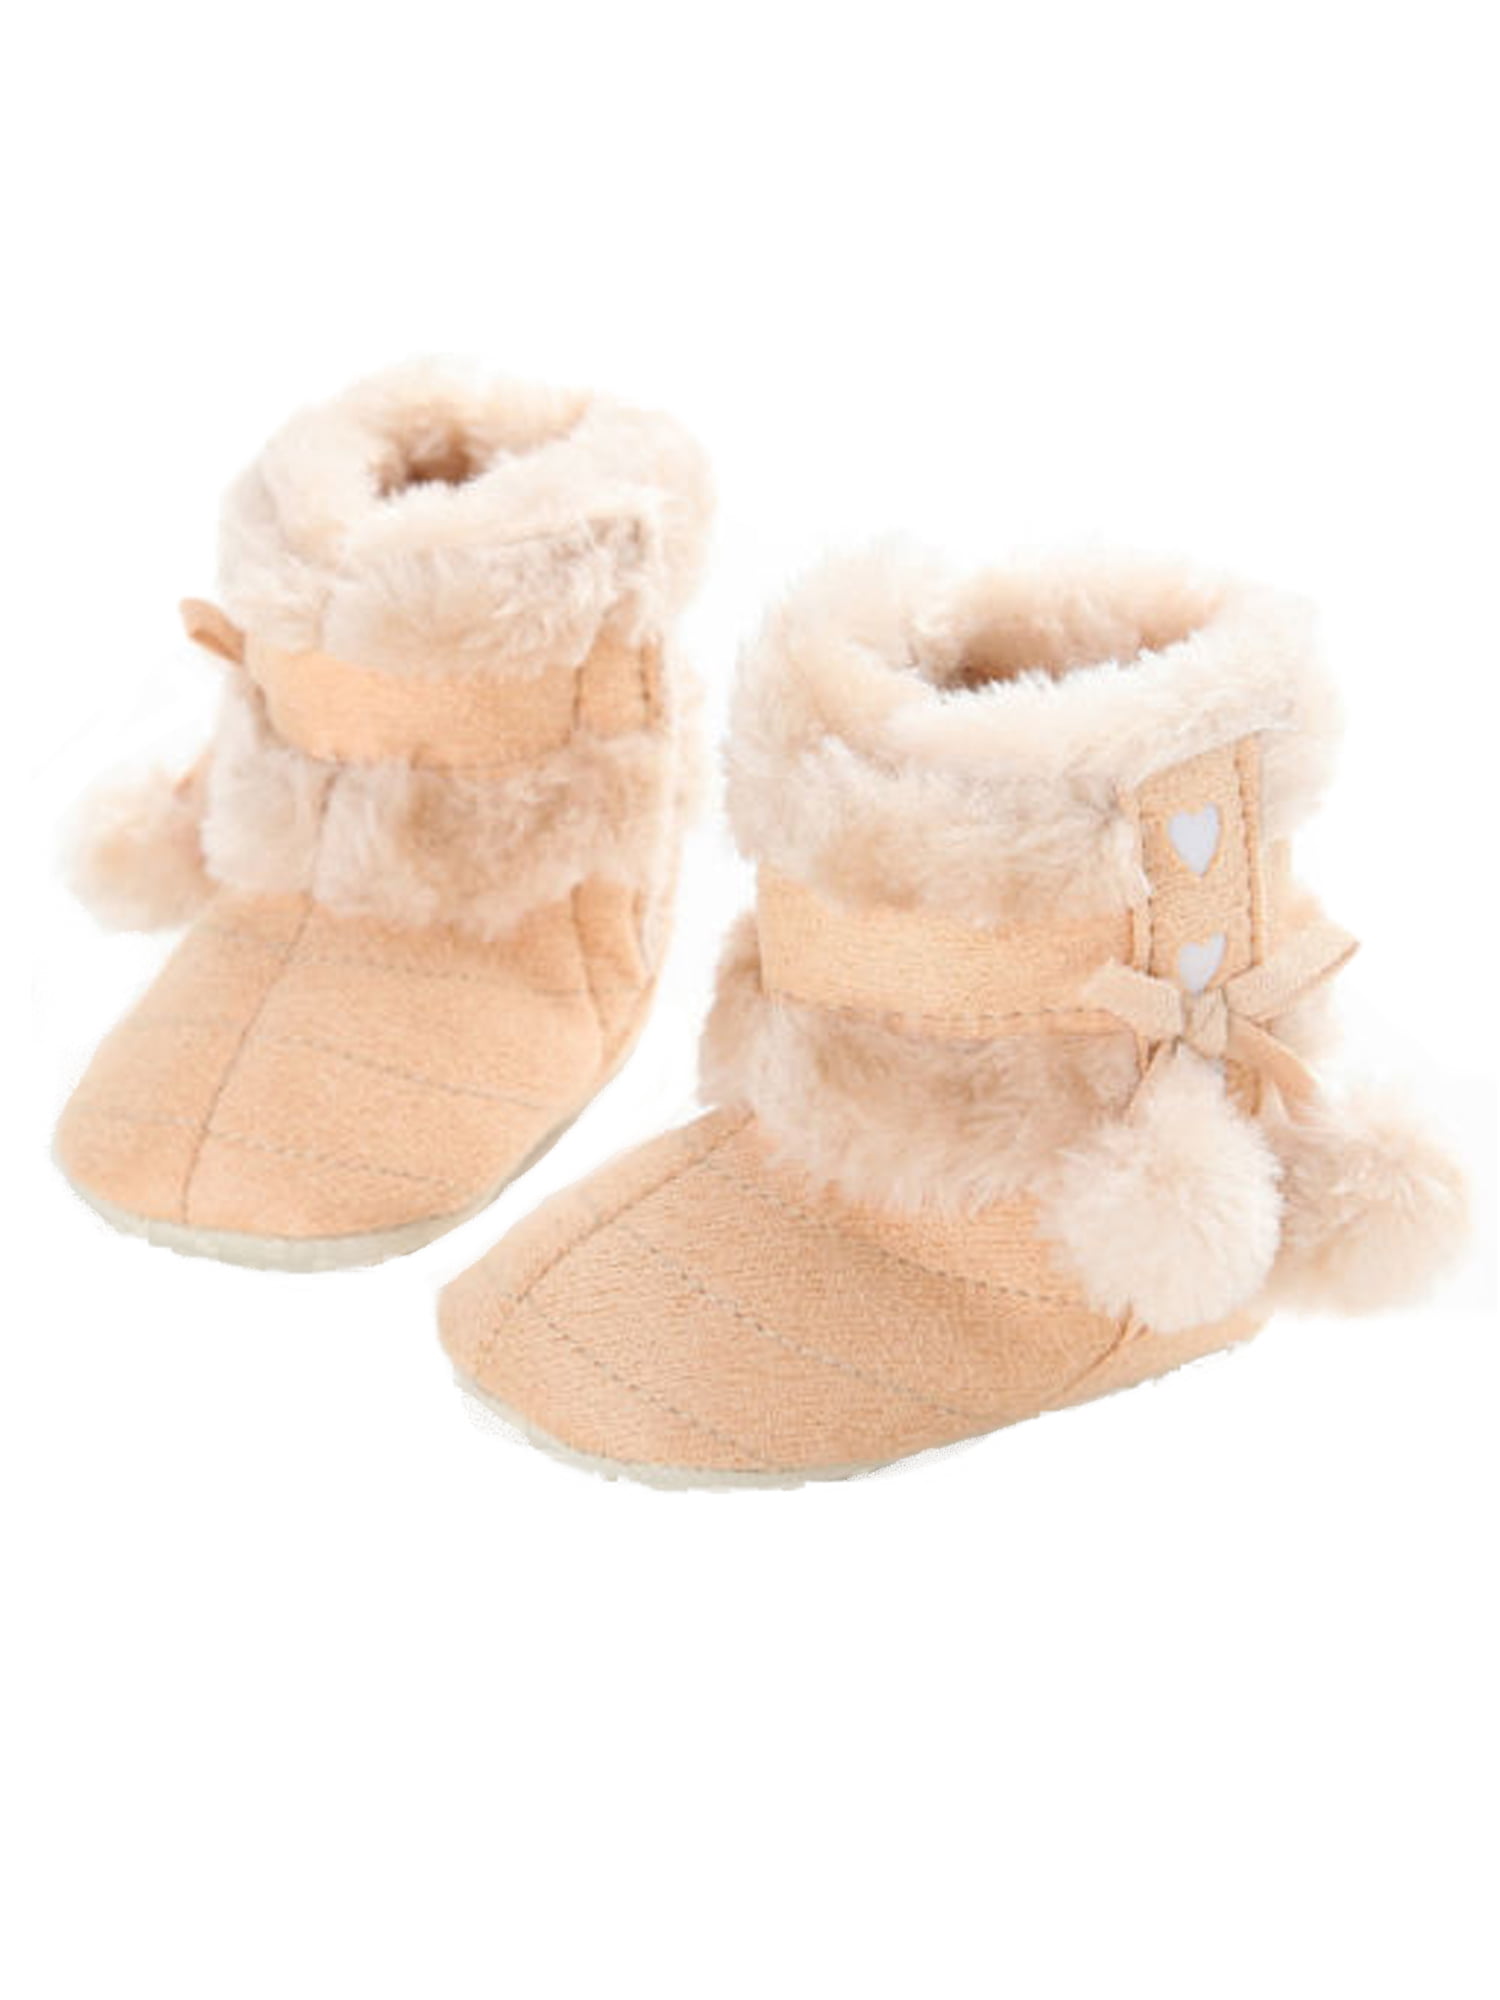 Voberry Baby Boy Girl Winter Warm Snow Boots Soft Sole Anti-Slip Bowknot Toddler Prewalker Newborn Infant Booties Crib Shoes